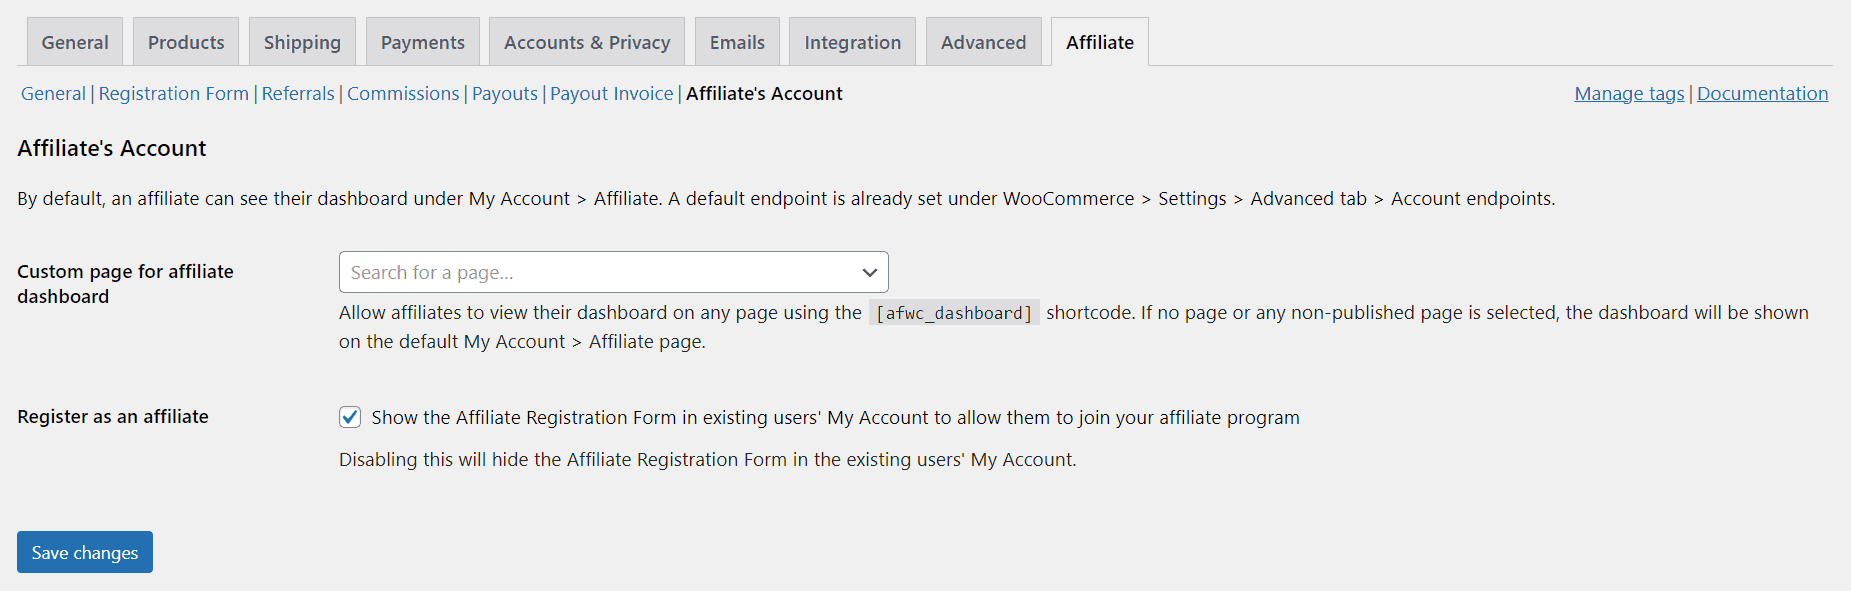 Affiliate for WooCommerce affiliate's account settings